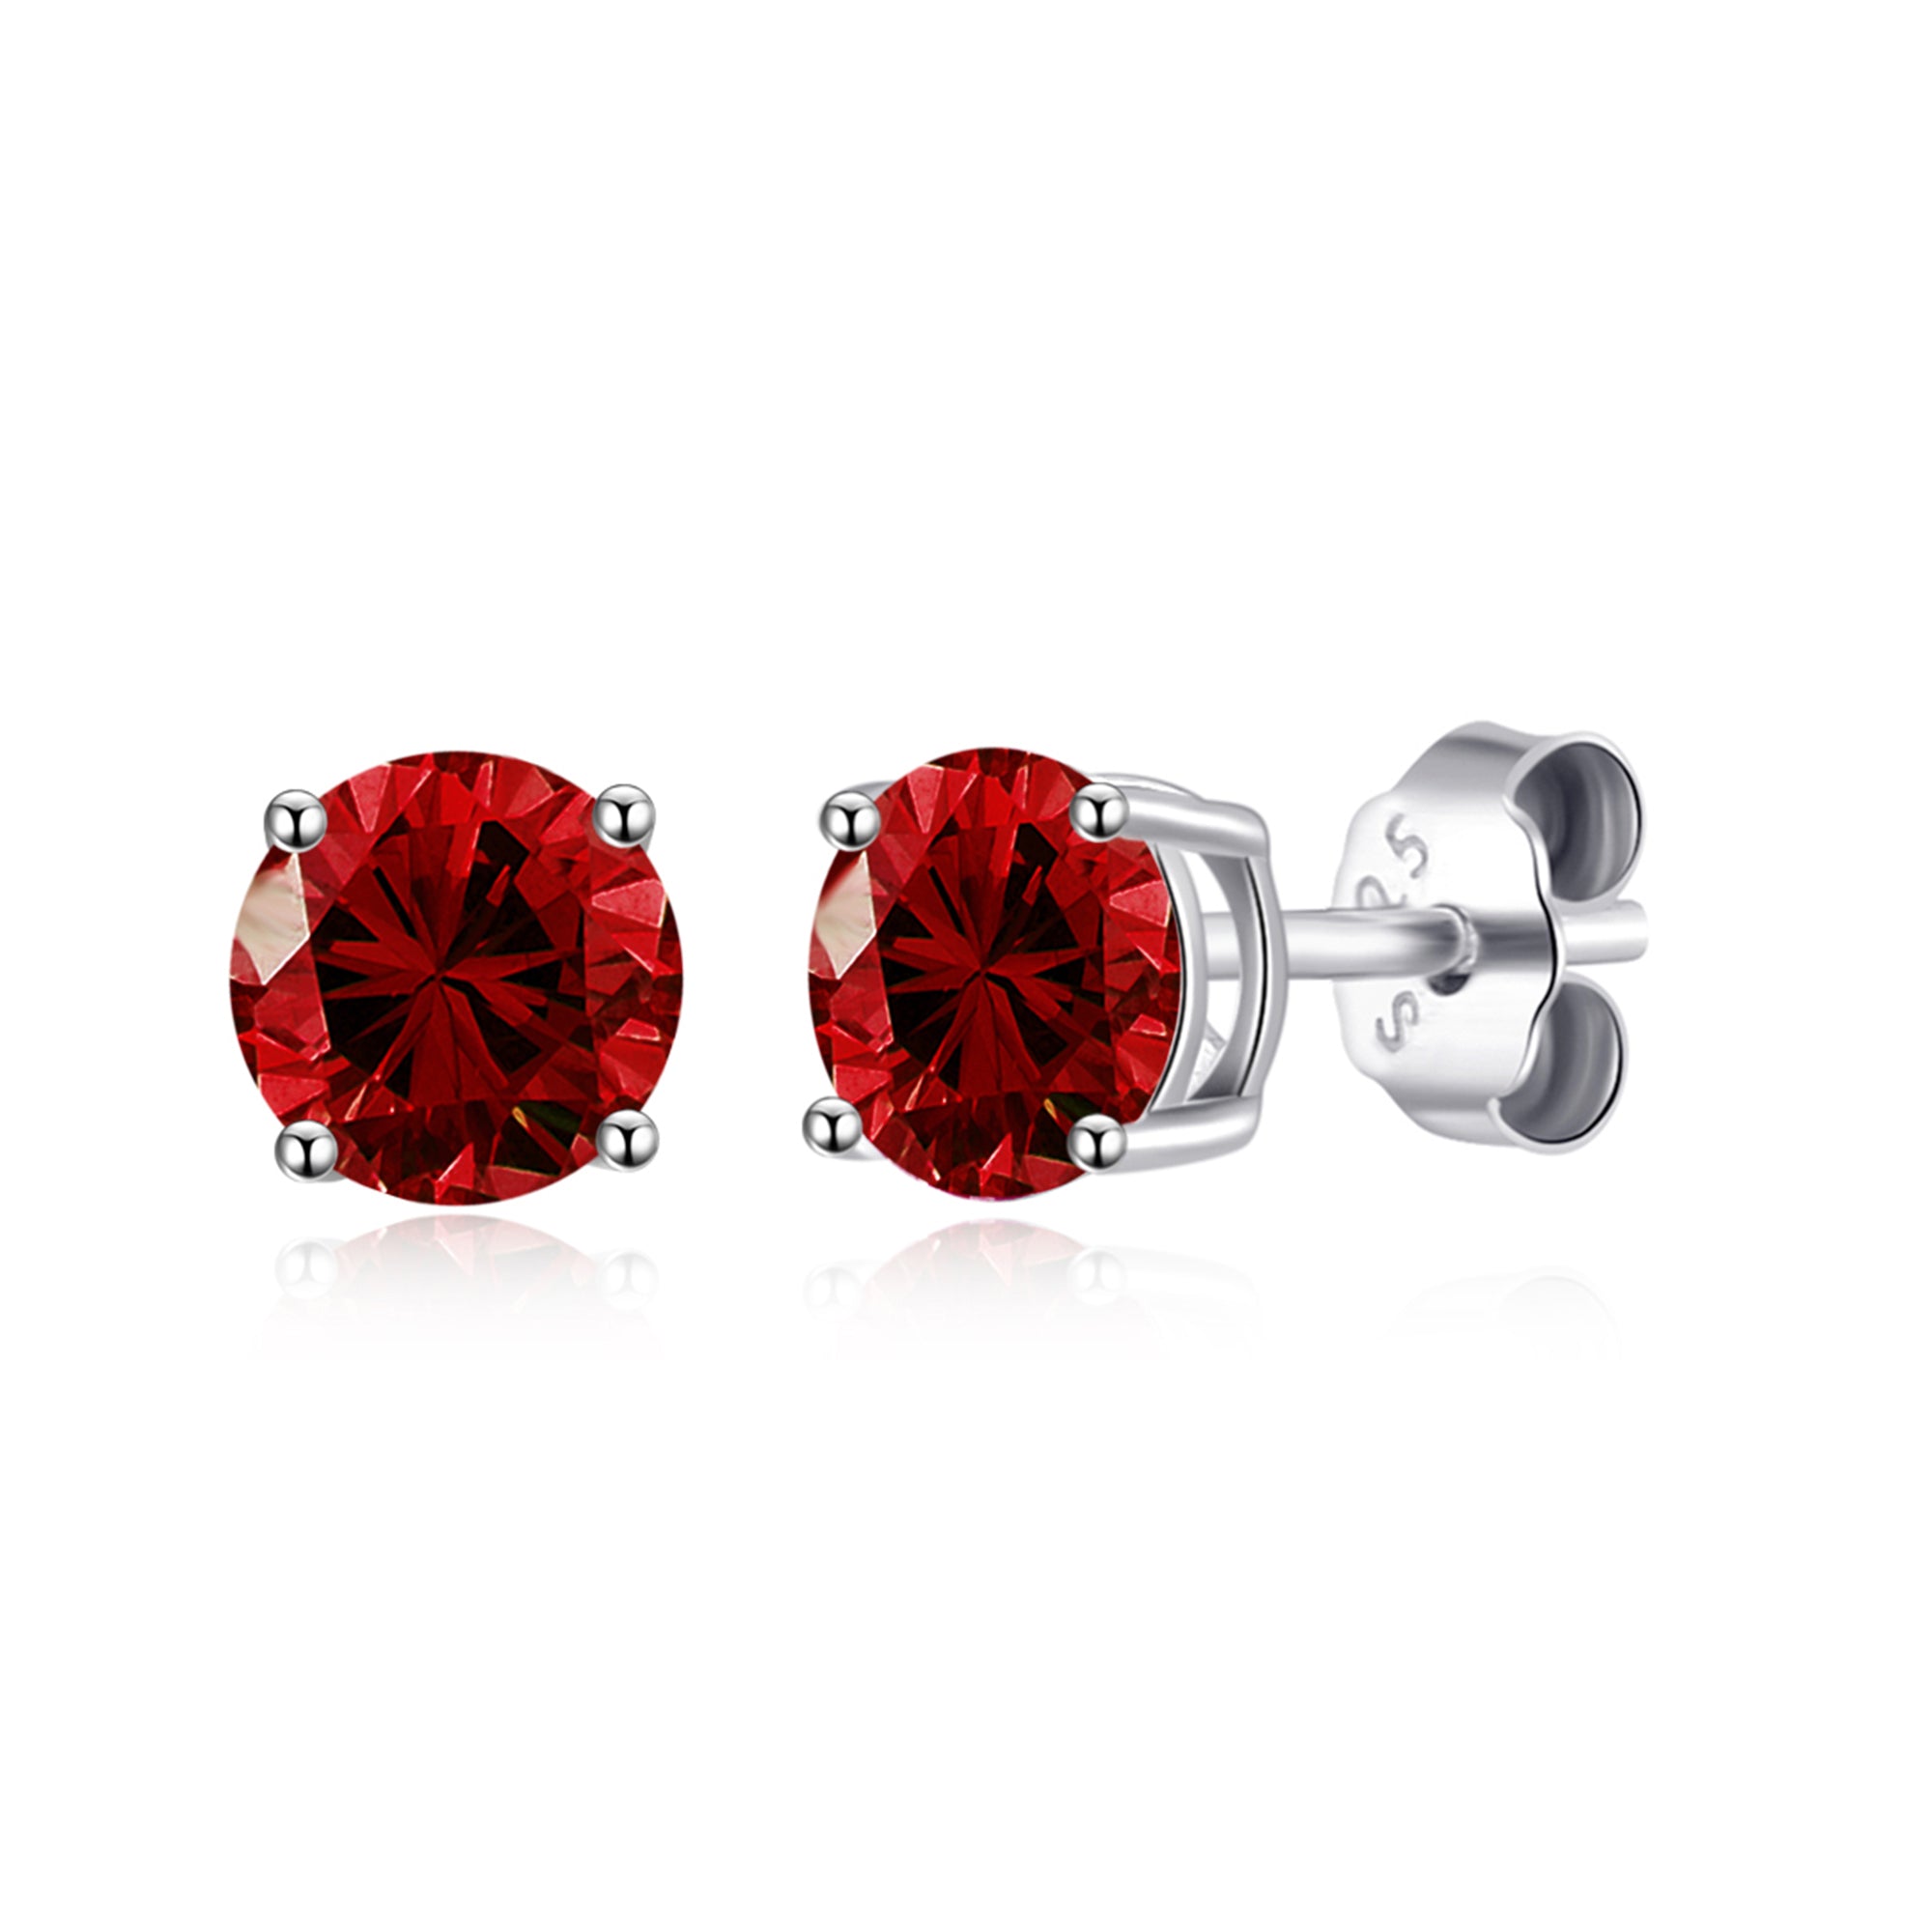 Sterling Silver January (Garnet) Birthstone Earrings Created with Zircondia® Crystals by Philip Jones Jewellery